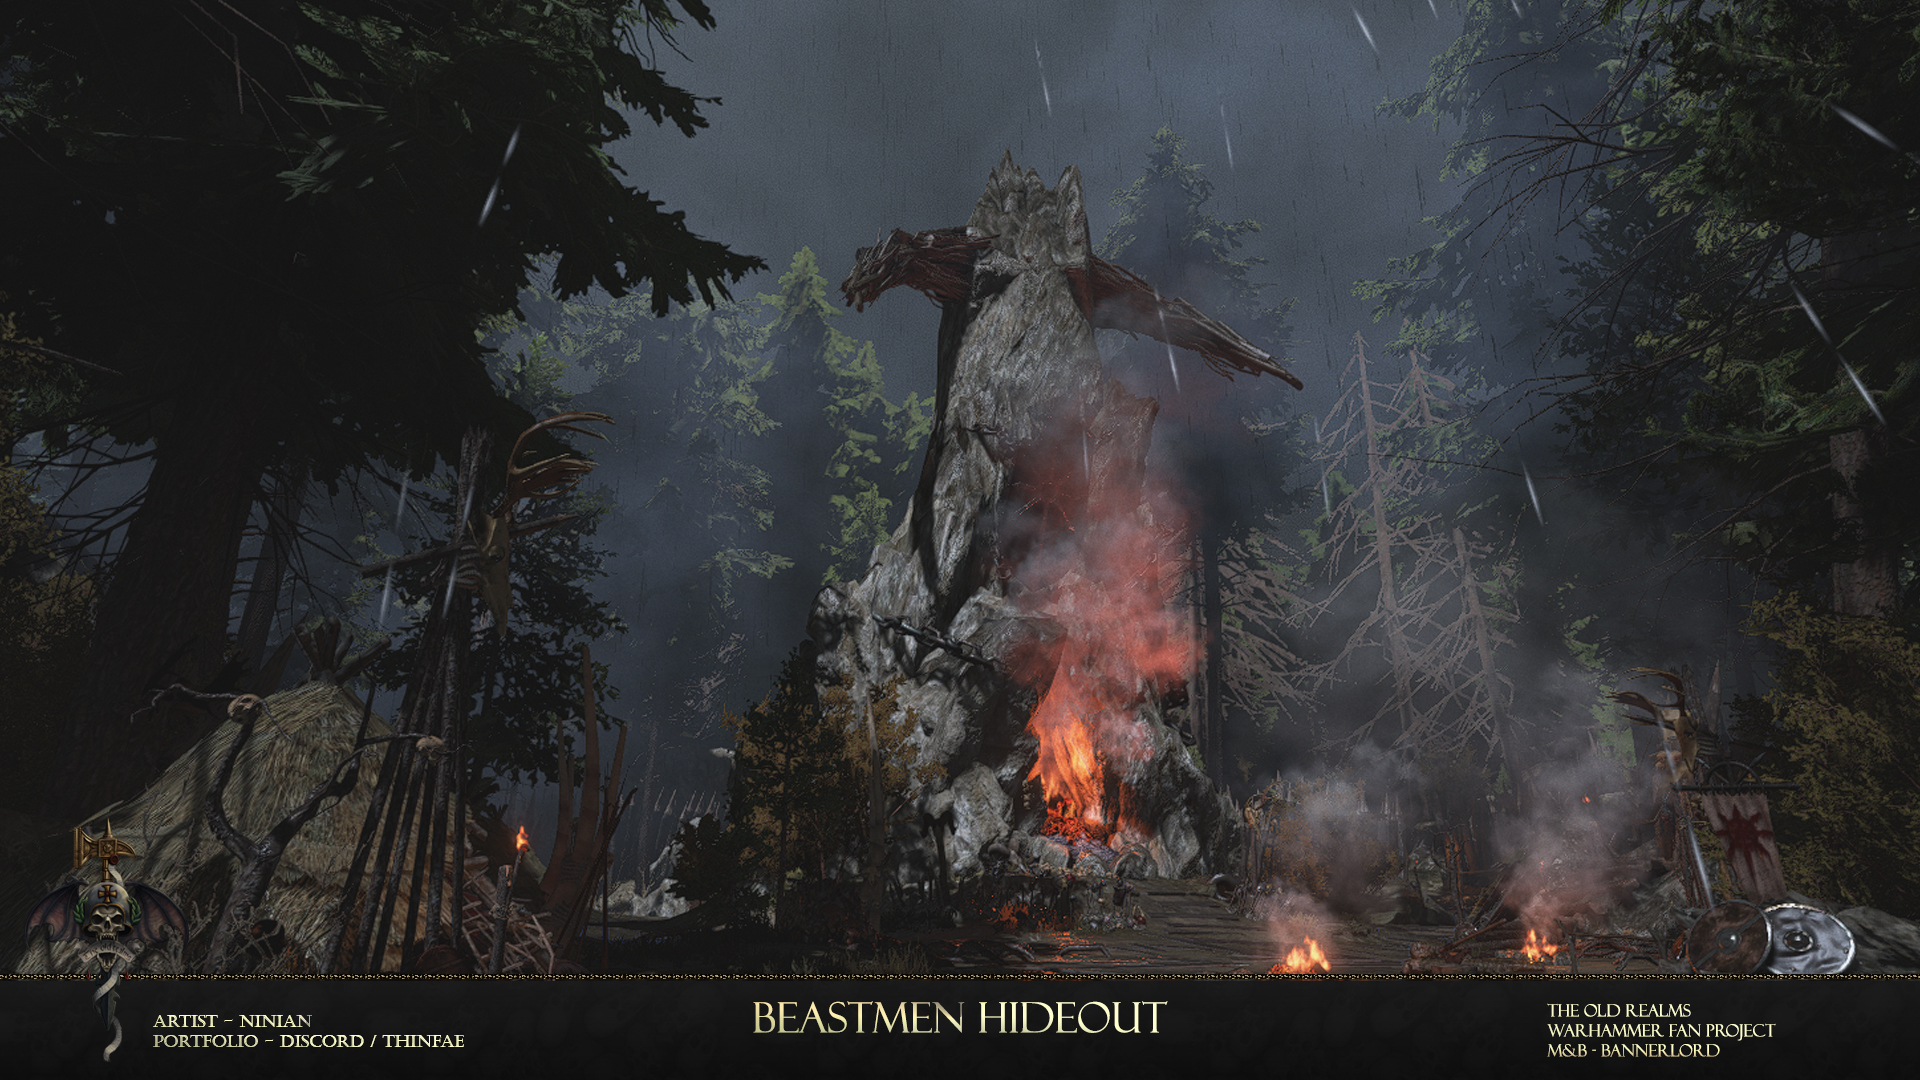 Beastmen hideout 04